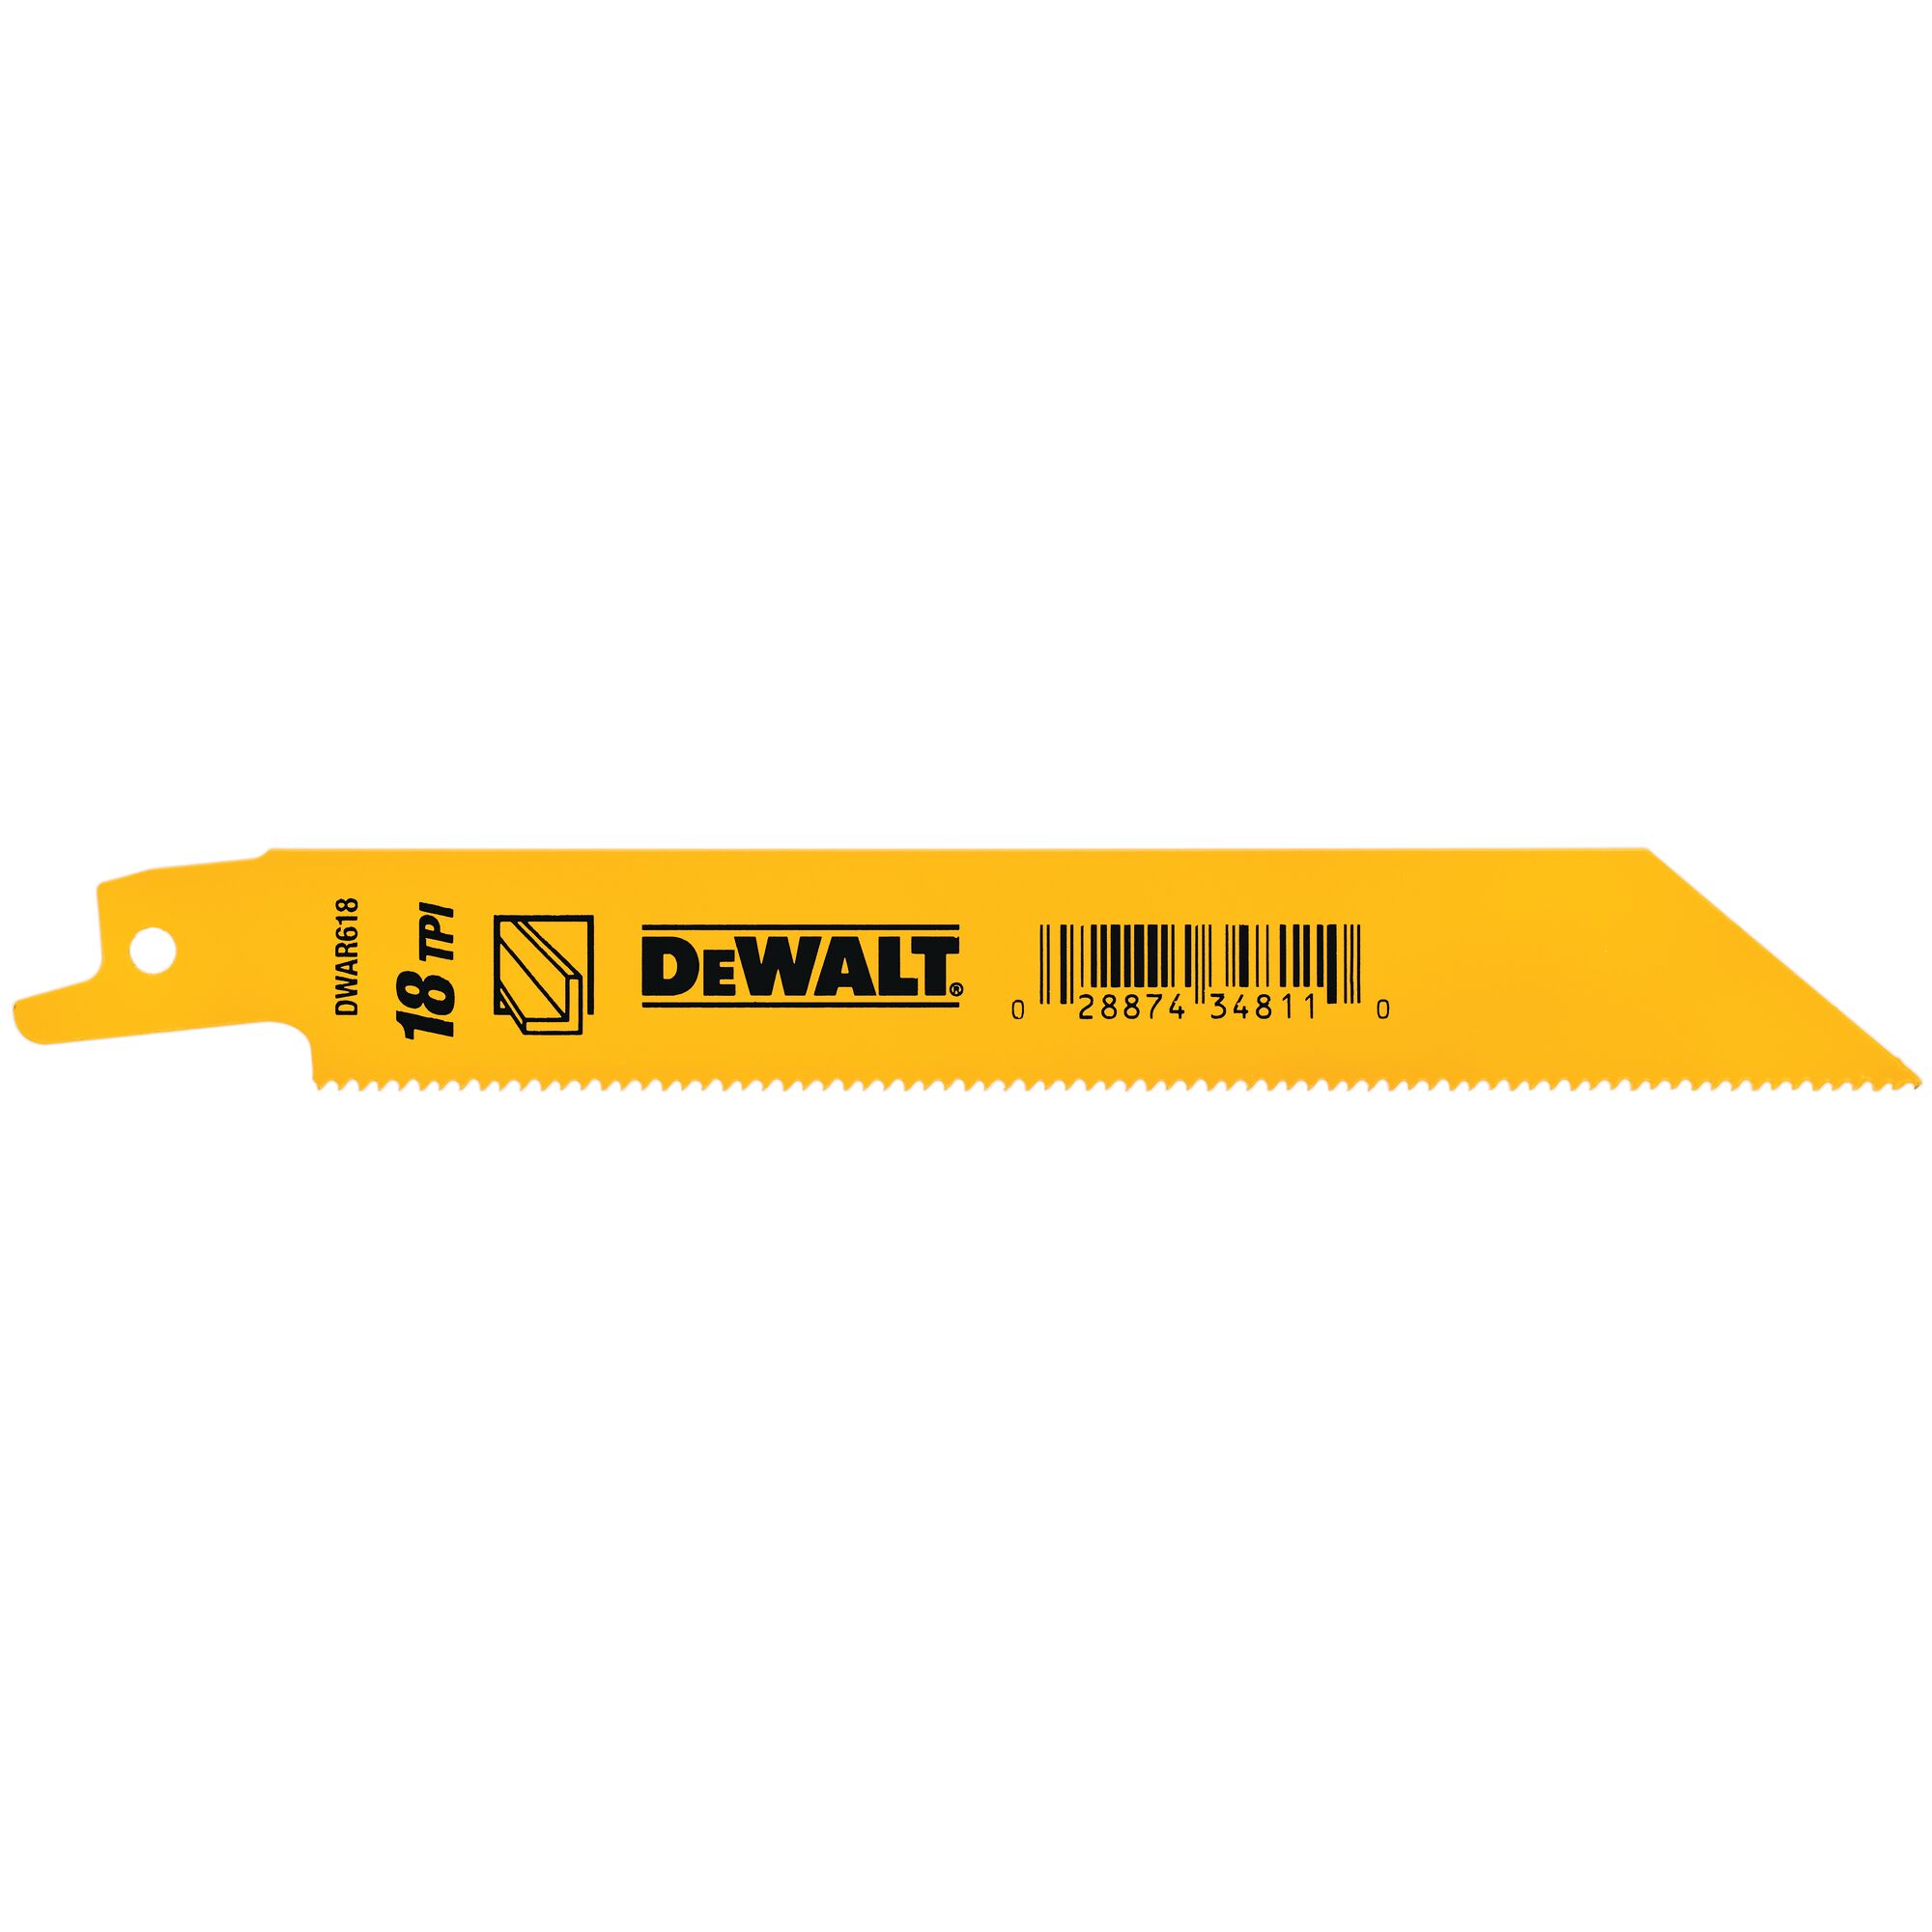 DEWALT Bi-metal 6-in 18 Tpi-TPI Metal Cutting Reciprocating Saw Blade  (5-Pack)